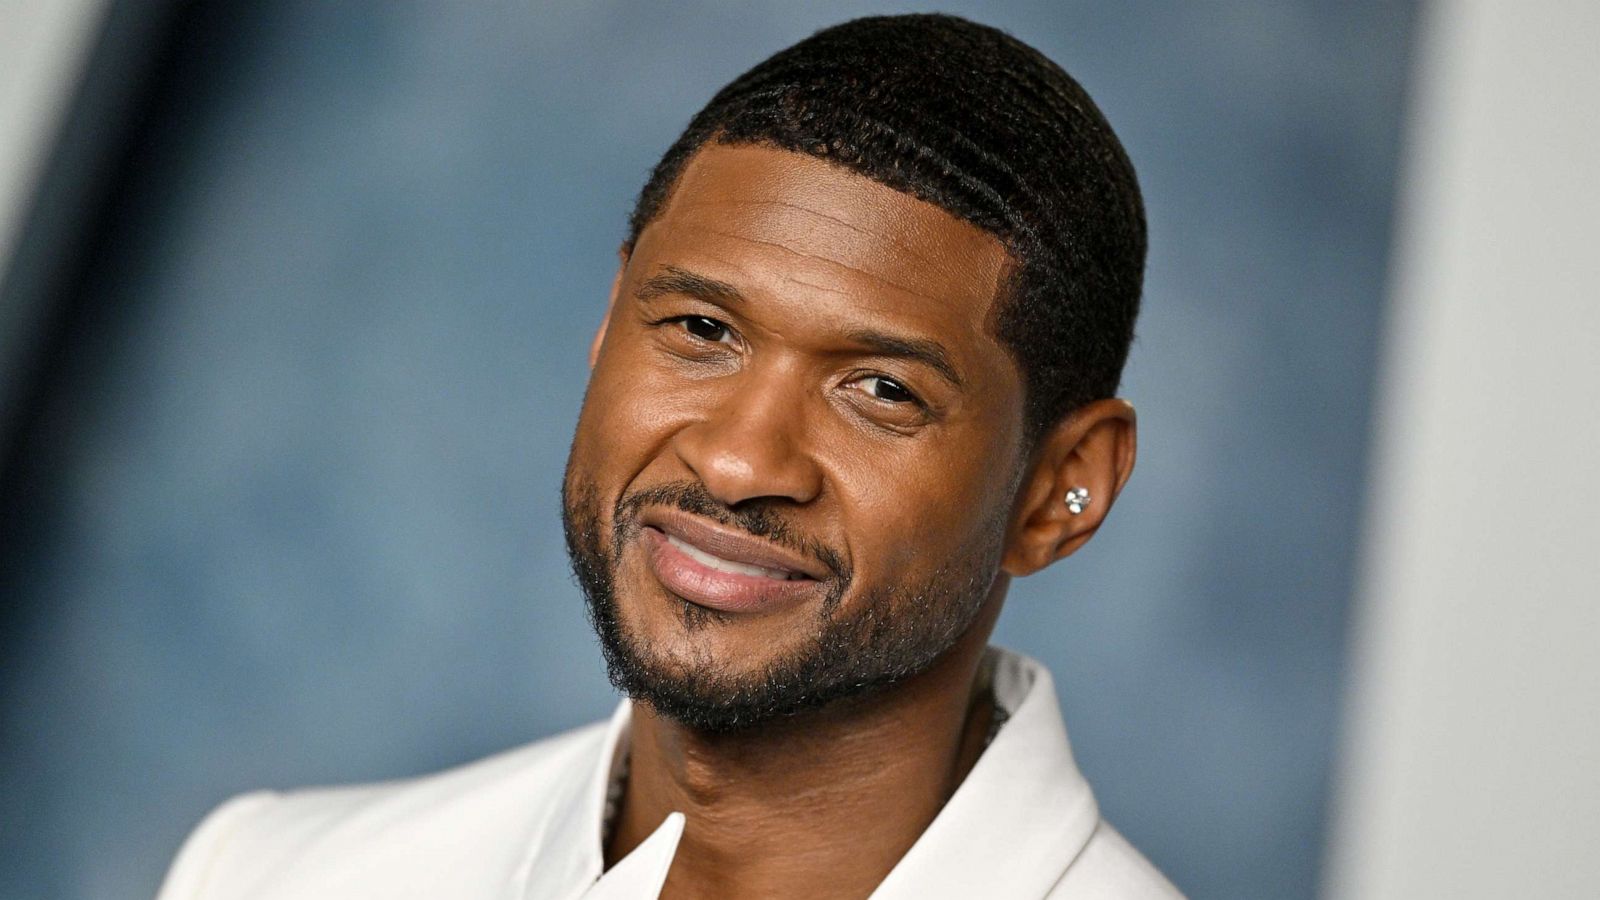 Men's Health Event, Usher Playing Super Bowl, 50 Buys Strip Club